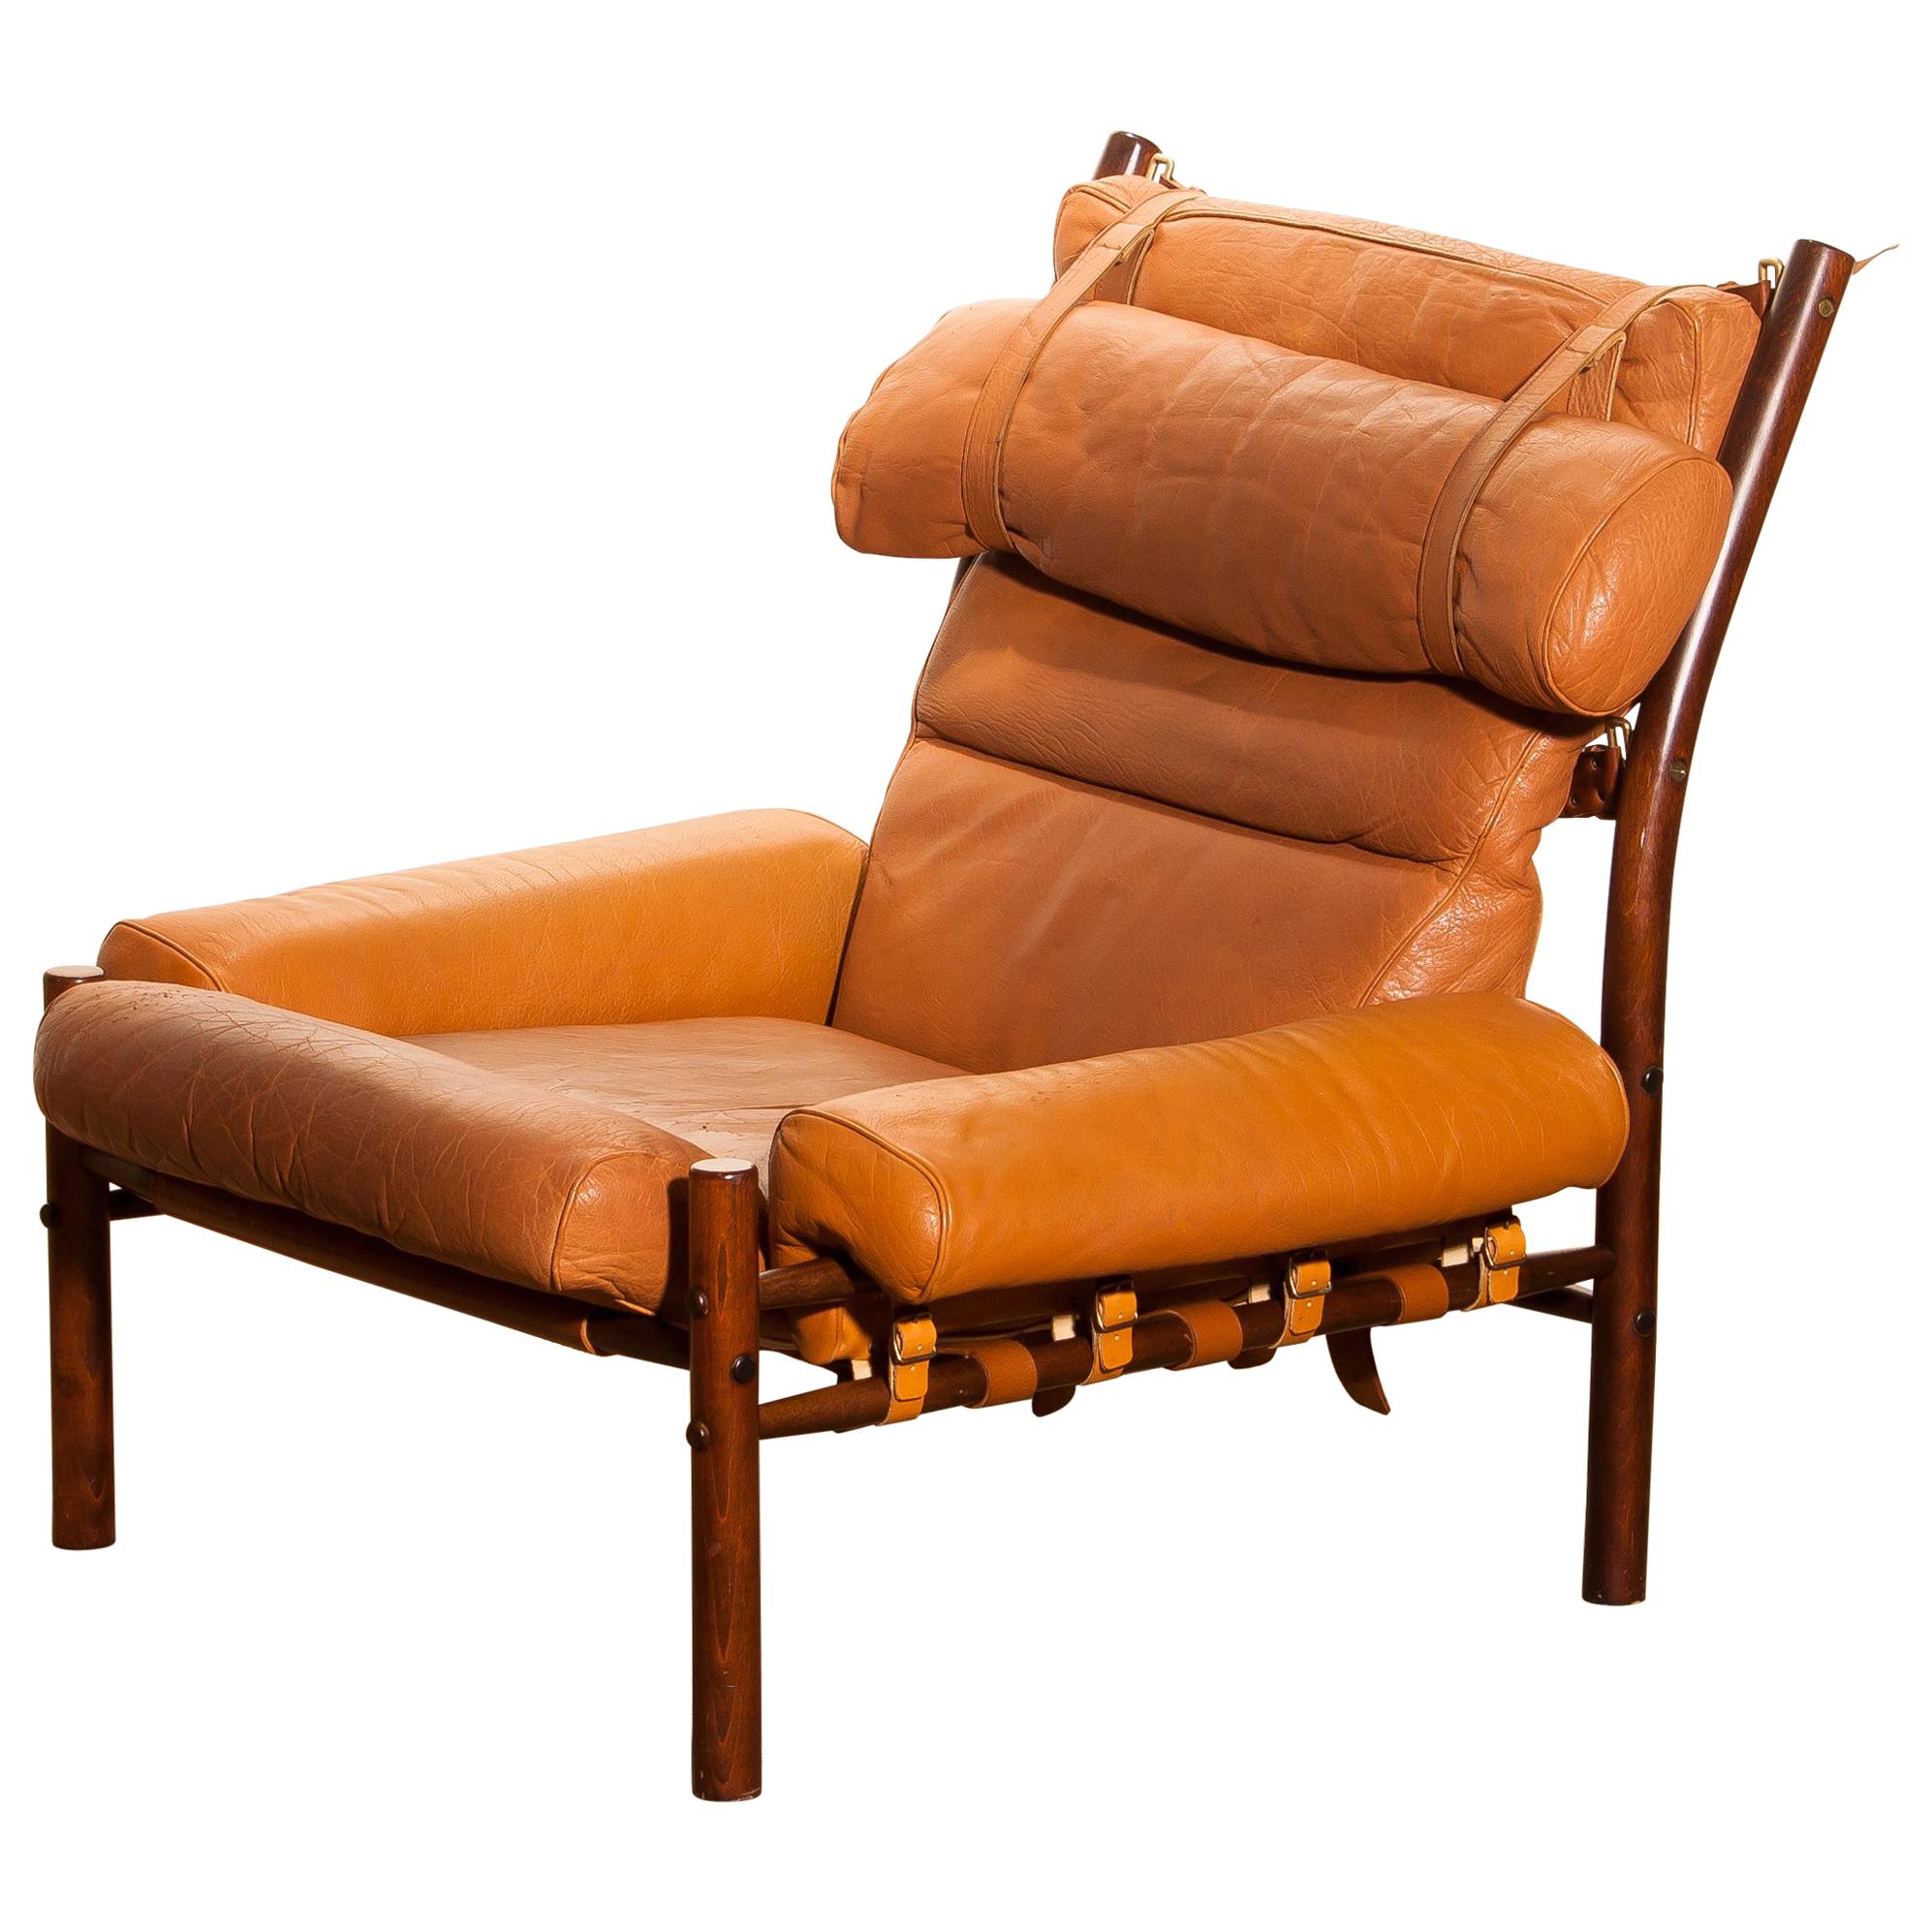 1968, Cognac Leather Safari Chair "Inca" by Arne Norell Möbler AB, Sweden